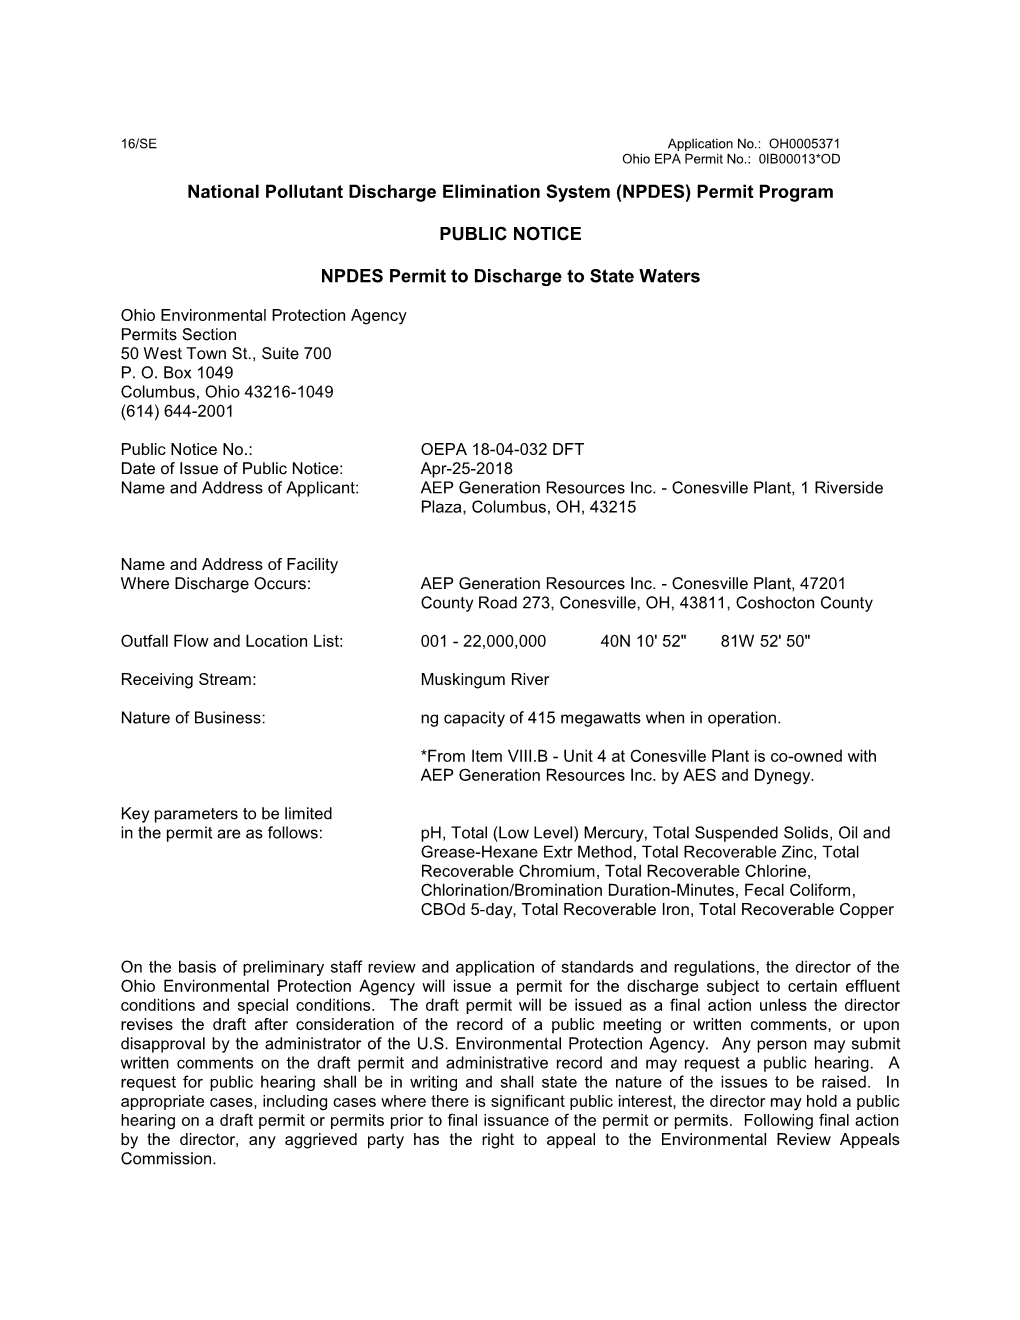 National Pollutant Discharge Elimination System (NPDES) Permit Program